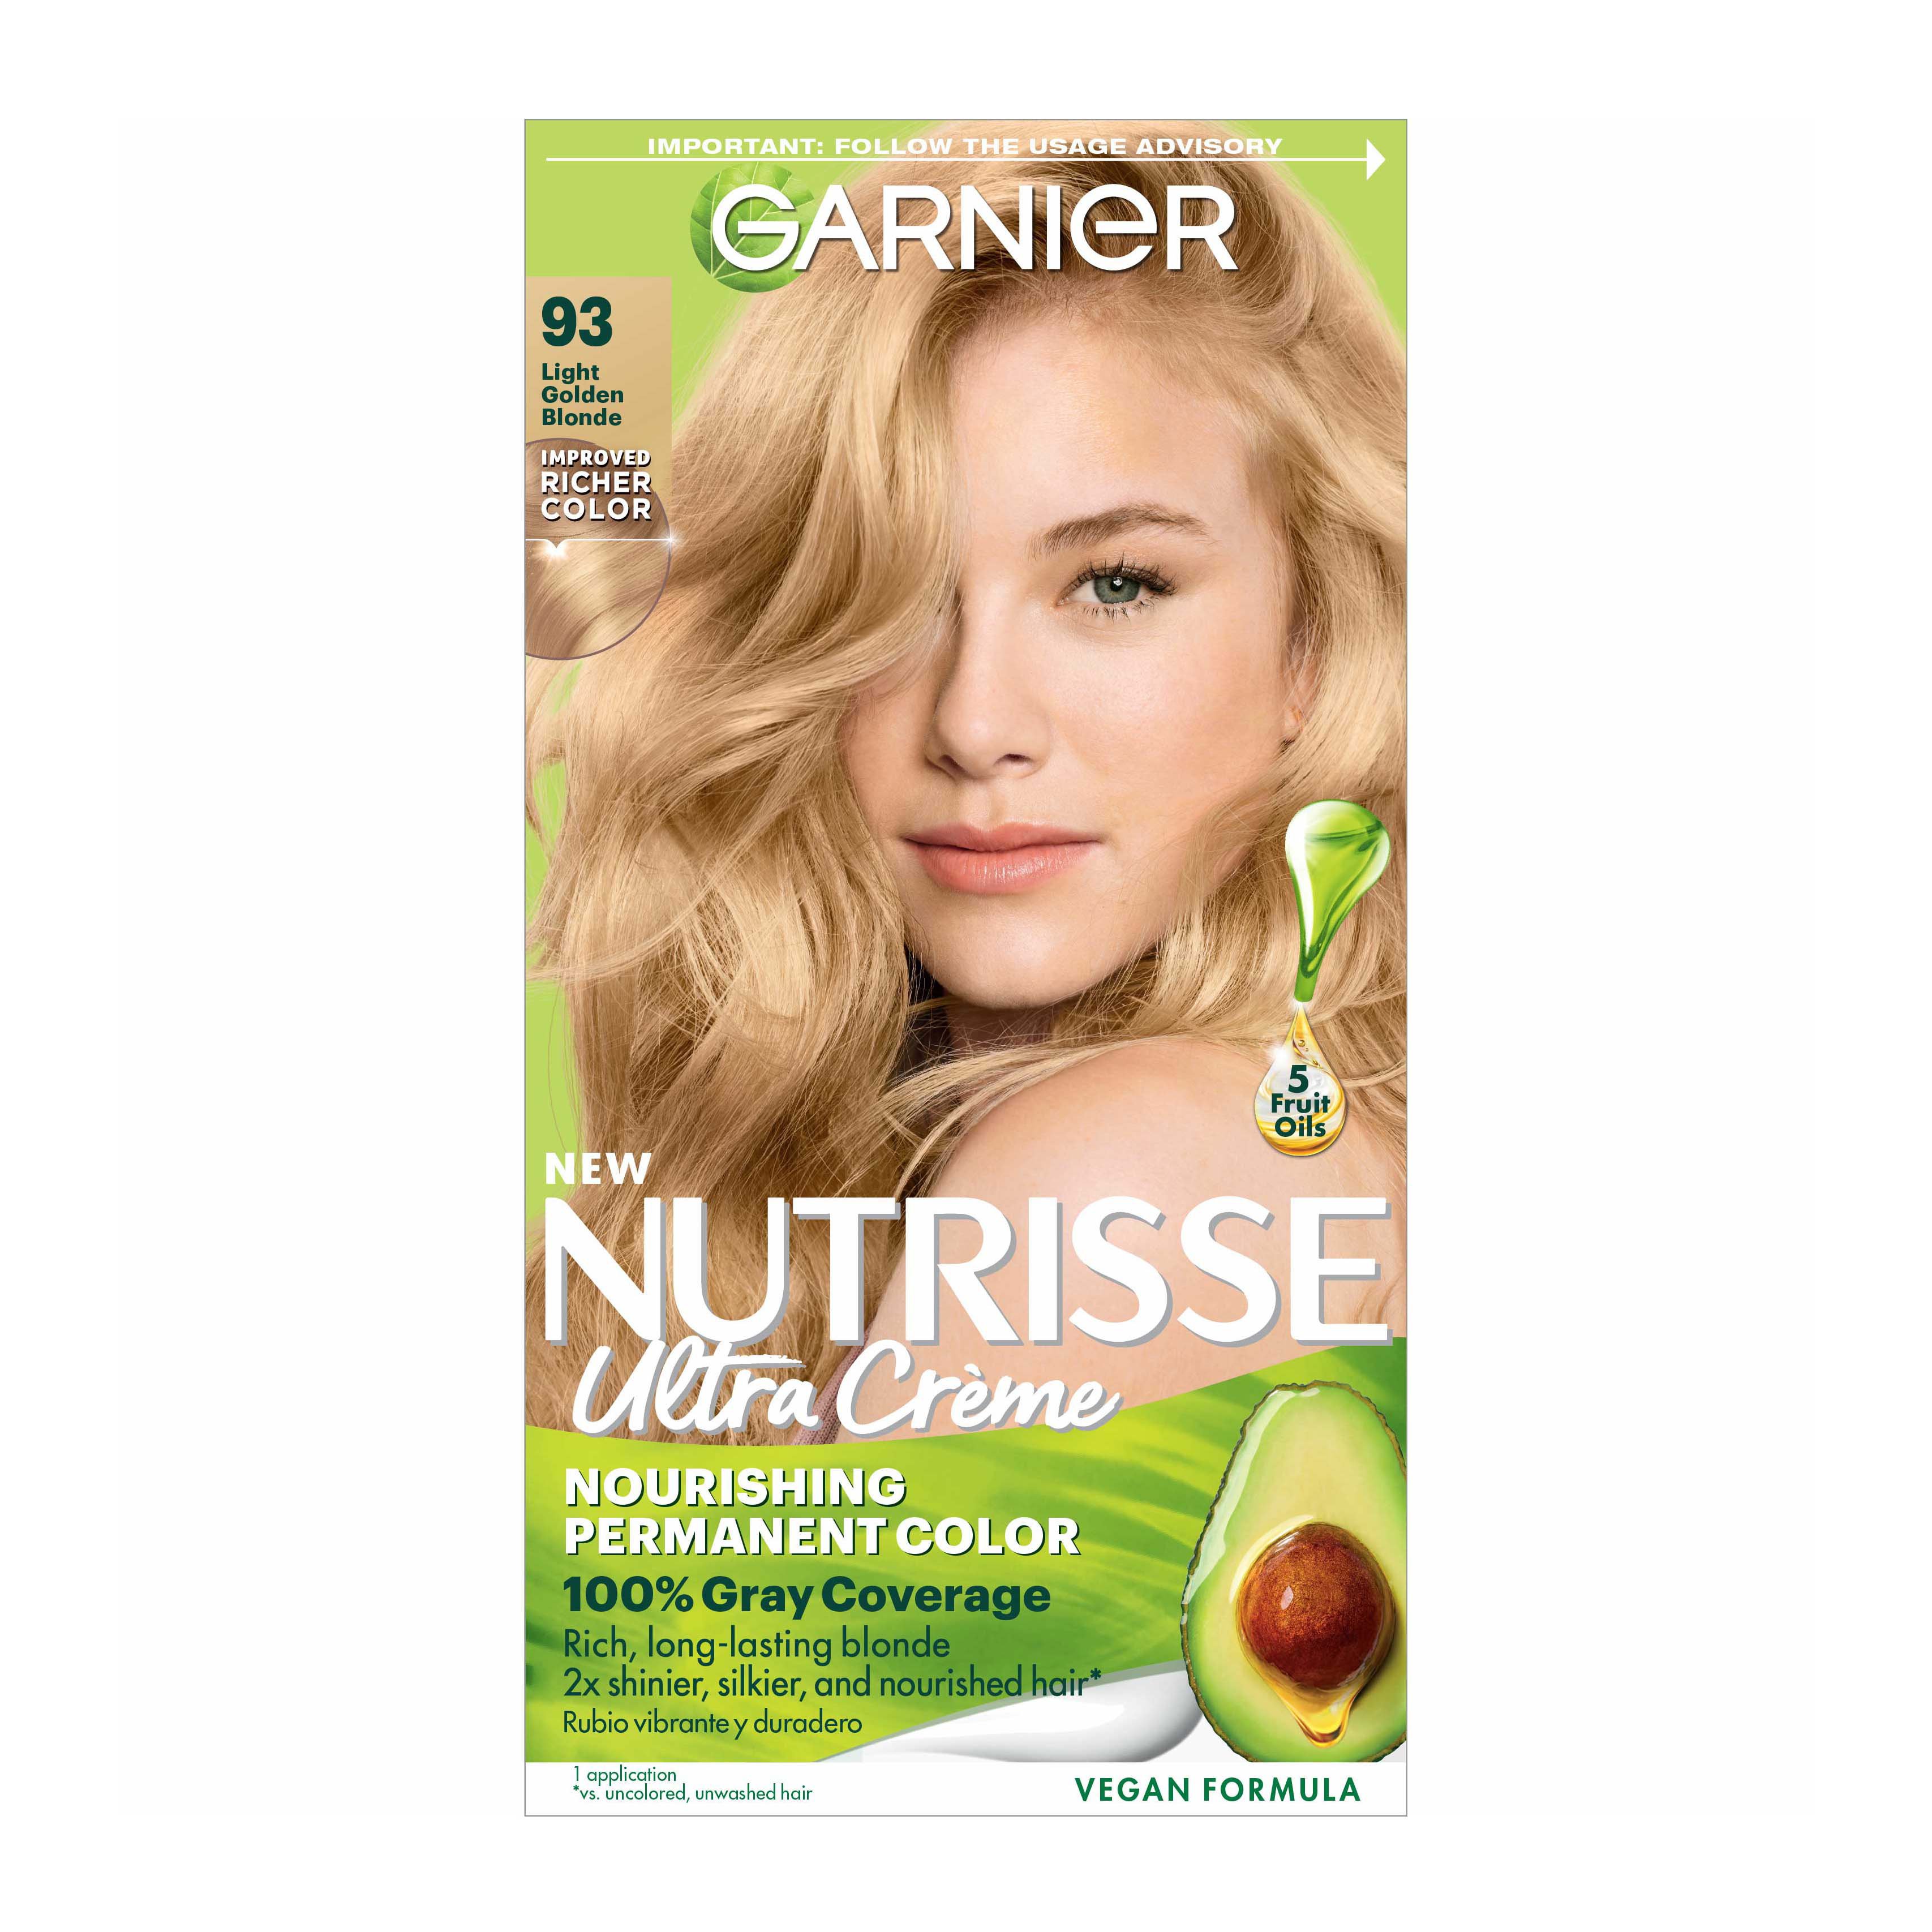 How To Use Shea Butter for Hair & Skin - Beauty Tips - Garnier